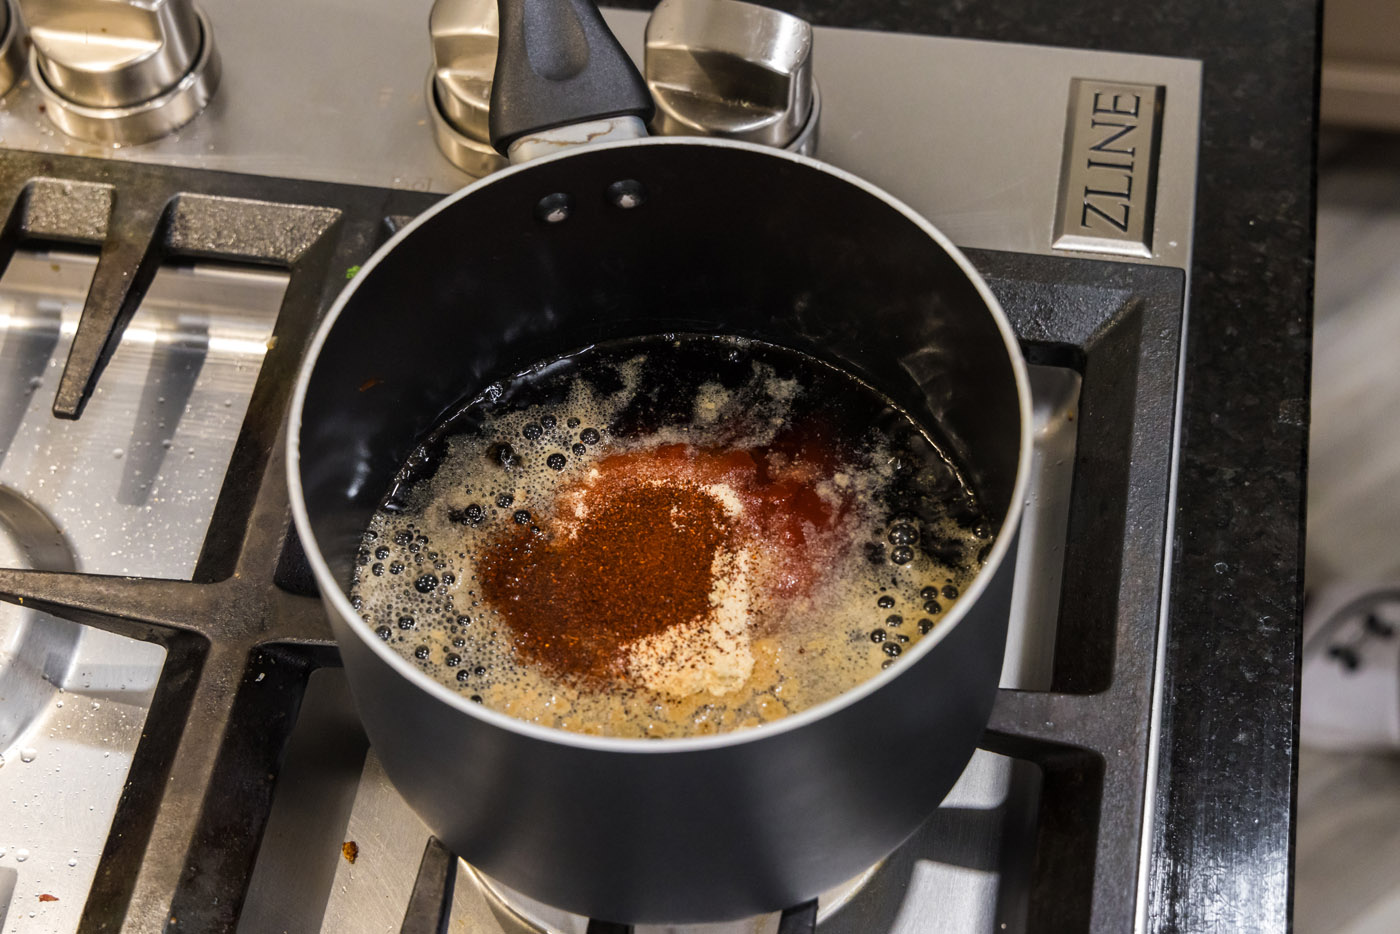 dr pepper sauce in a saucepan